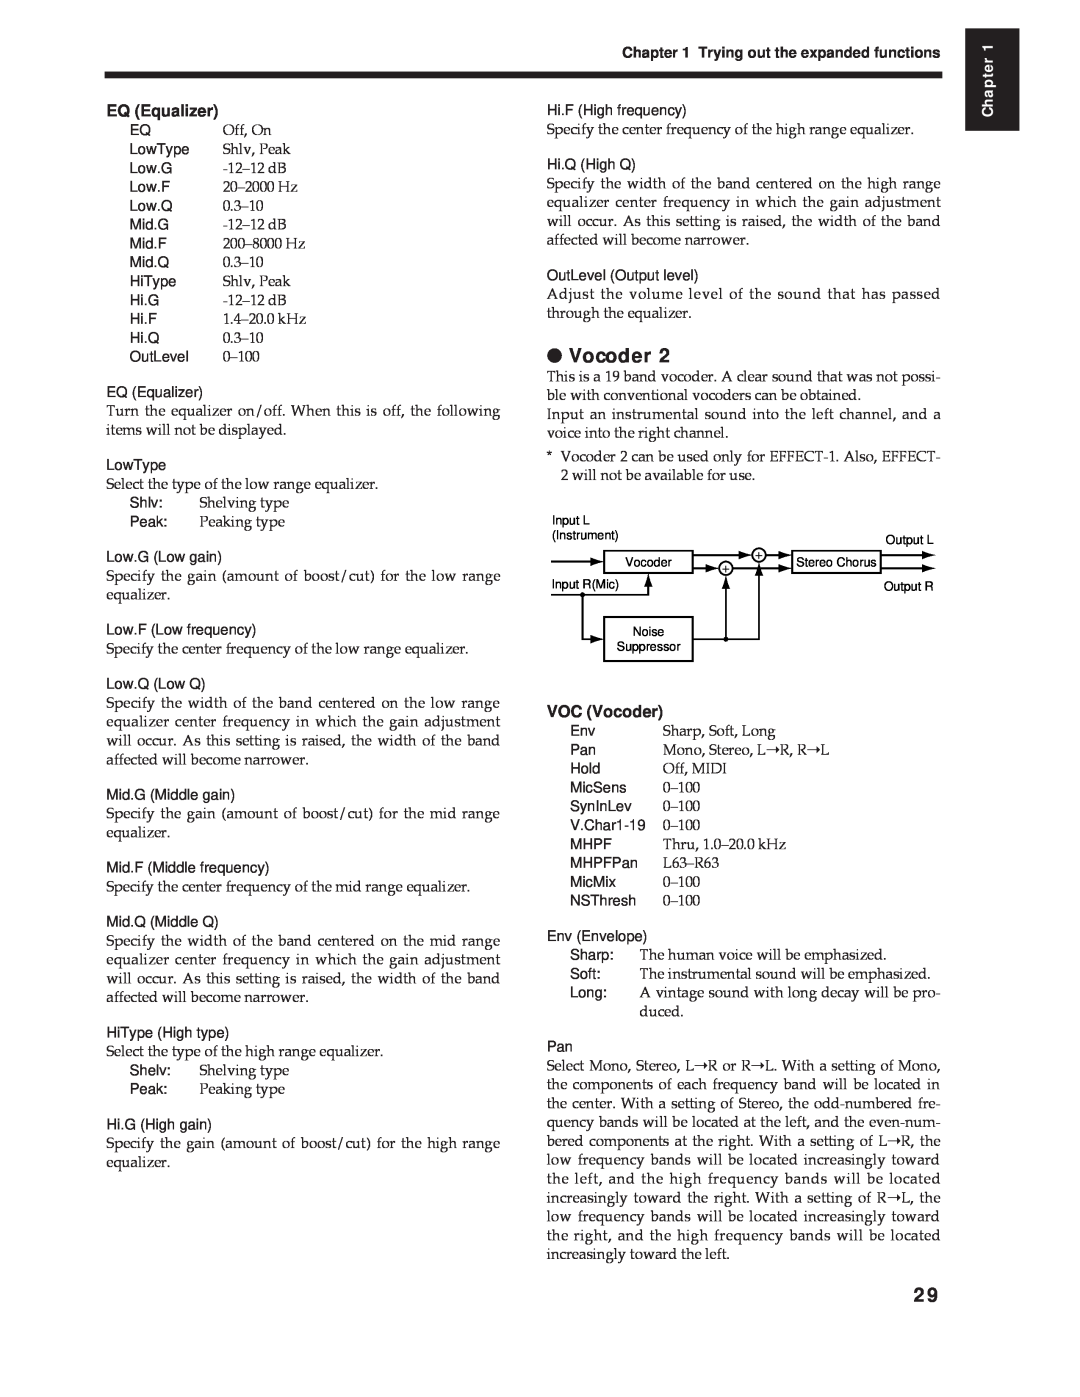 Roland Vs-880 important safety instructions EQ Equalizer, VOC Vocoder, Chapter, Output R 